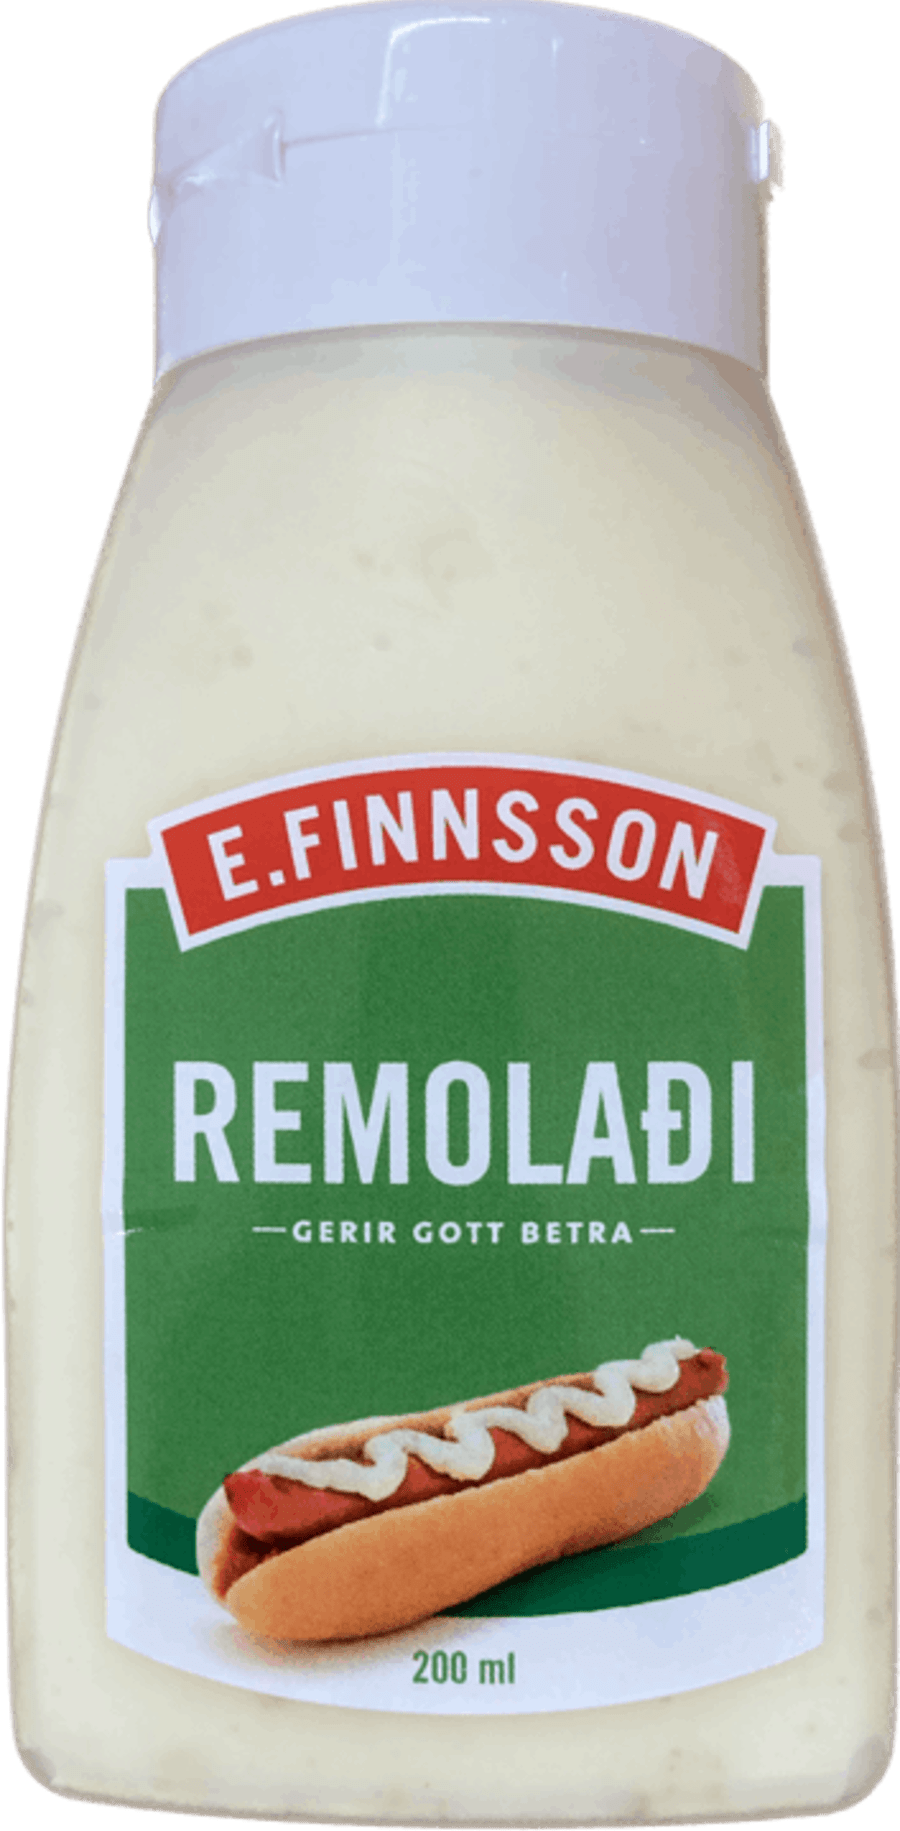 E.finnsson sósa remúlaði 200 ml